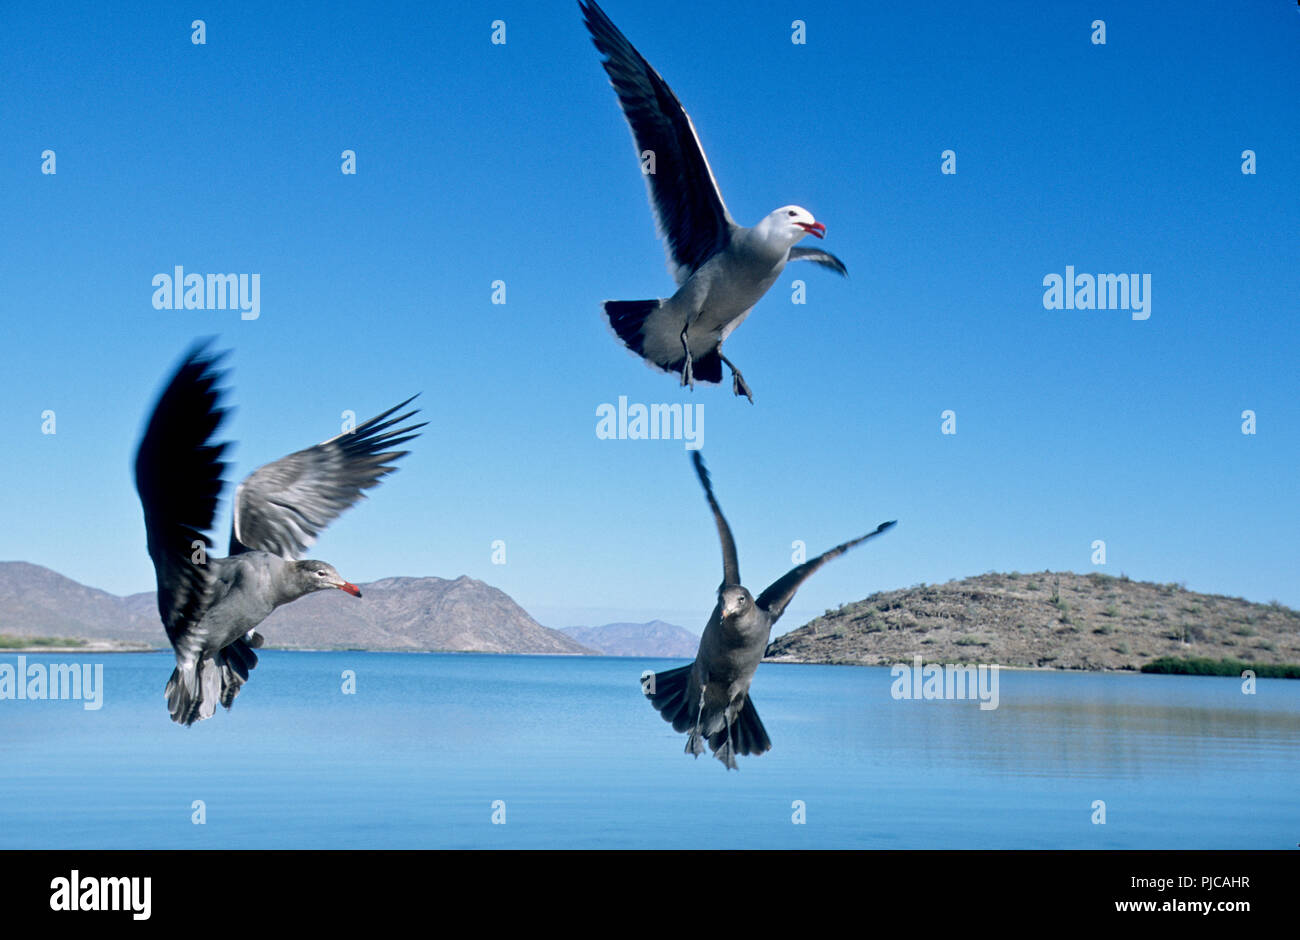 Juvenile and adult Heermann's gulls in flight, Bahia Concepcion, Sea of Cortez, Baja California Sur, Mexico Stock Photo